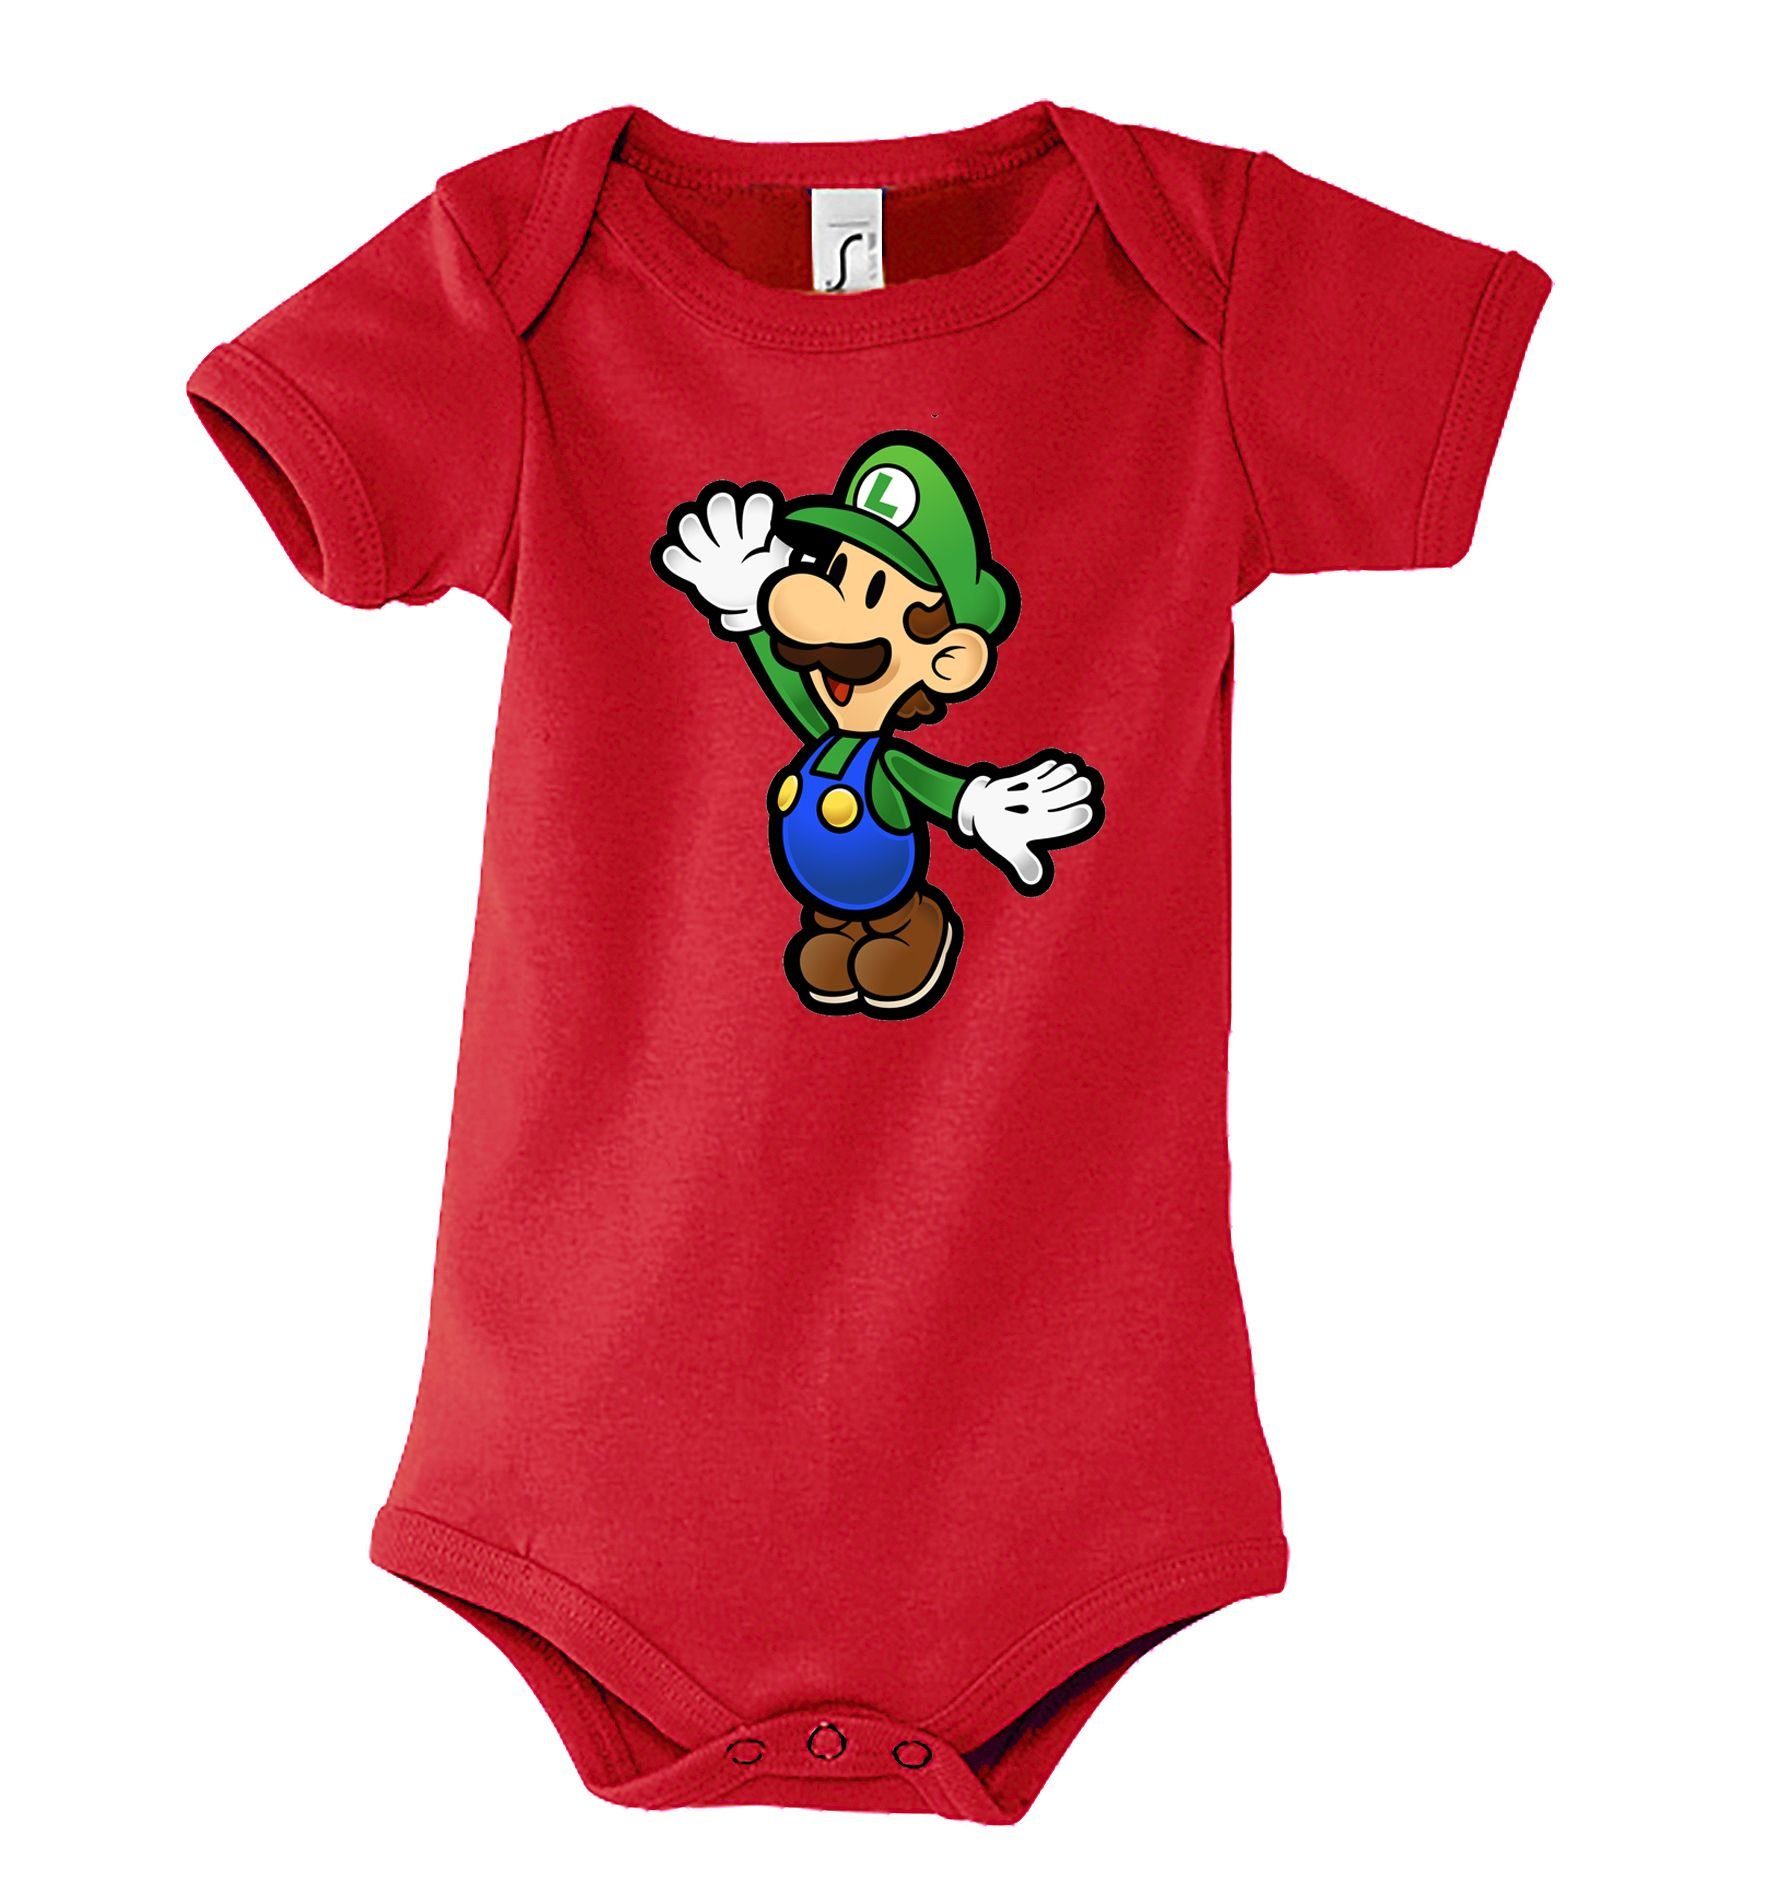 Youth Designz Kurzarmbody Baby Body Strampler Luigi mit niedlichem Frontprint Rot